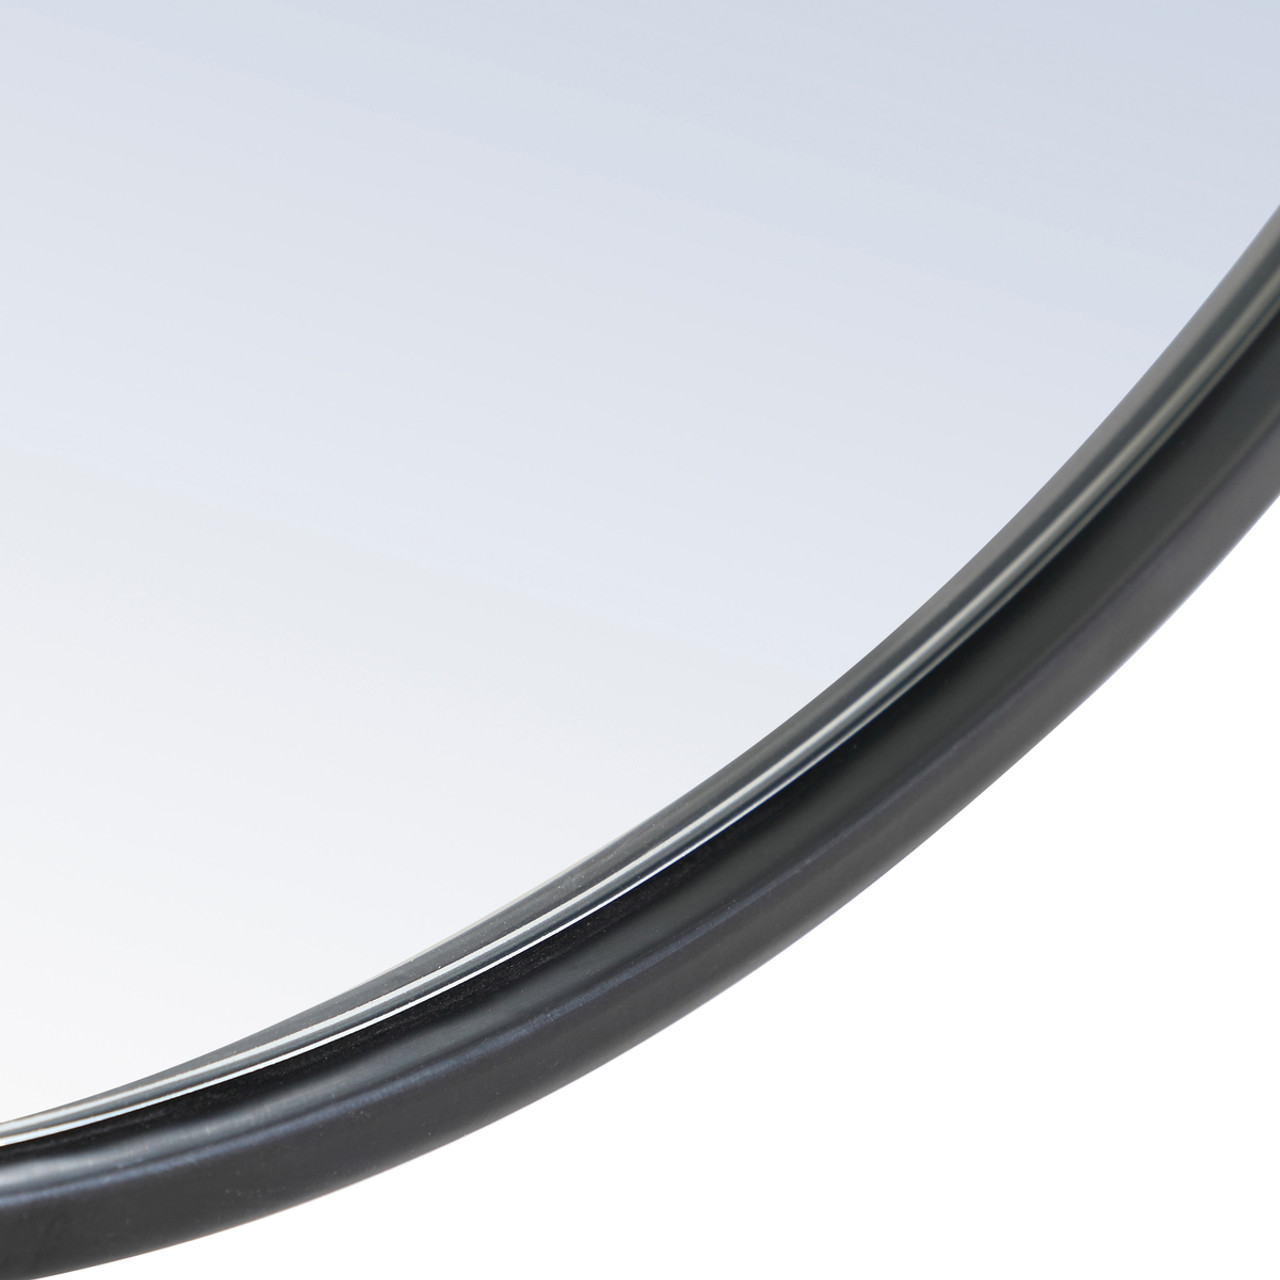 ELEGANT DECOR MR4051BK Metal frame Round Mirror with decorative hook 24 inch Black finish